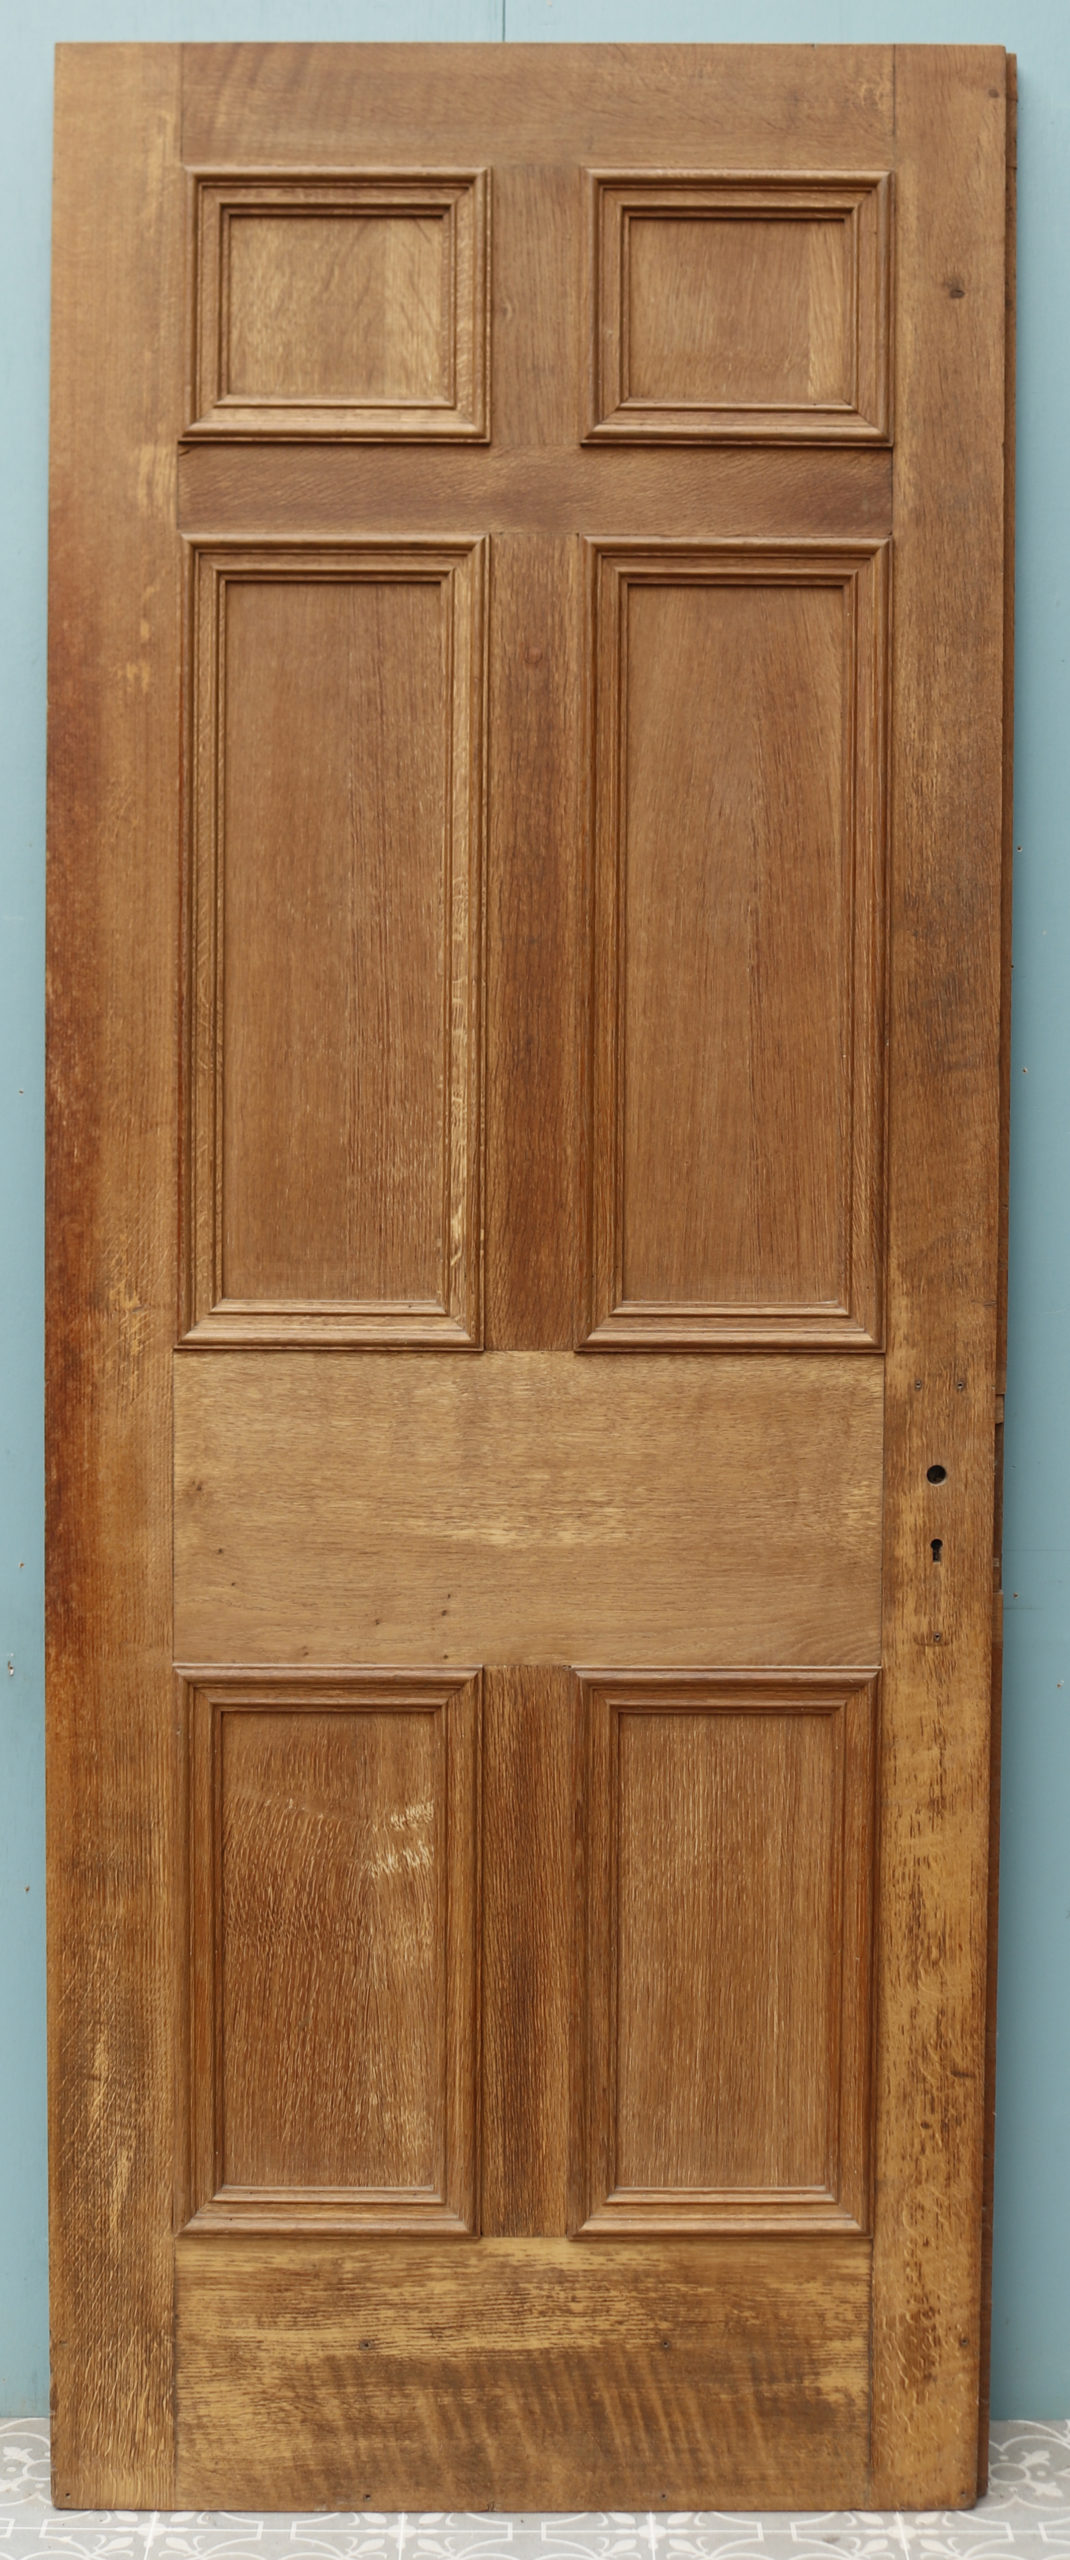 A Reclaimed Solid Oak Front Door - Uk Architectural Heritage